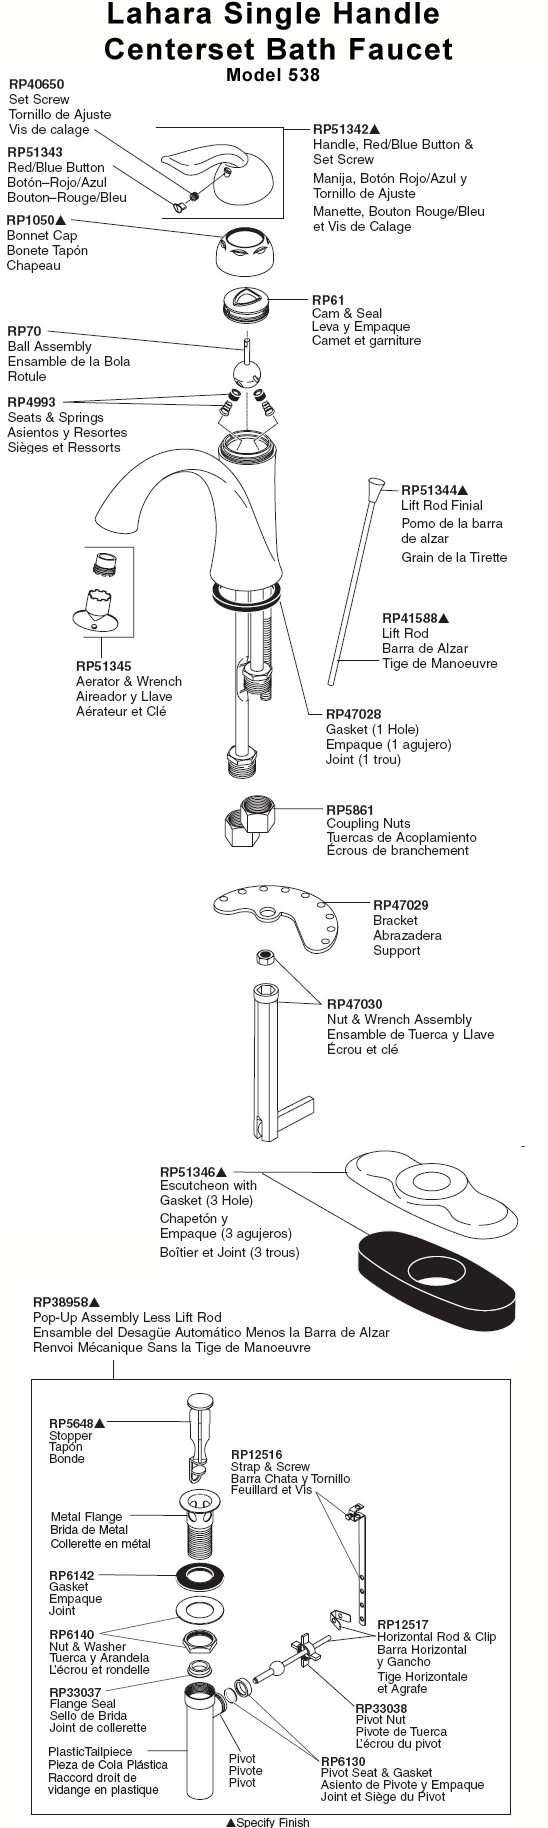 Lahara Two Handle Center Set Bathroom Faucet Parts Diagram Model 538